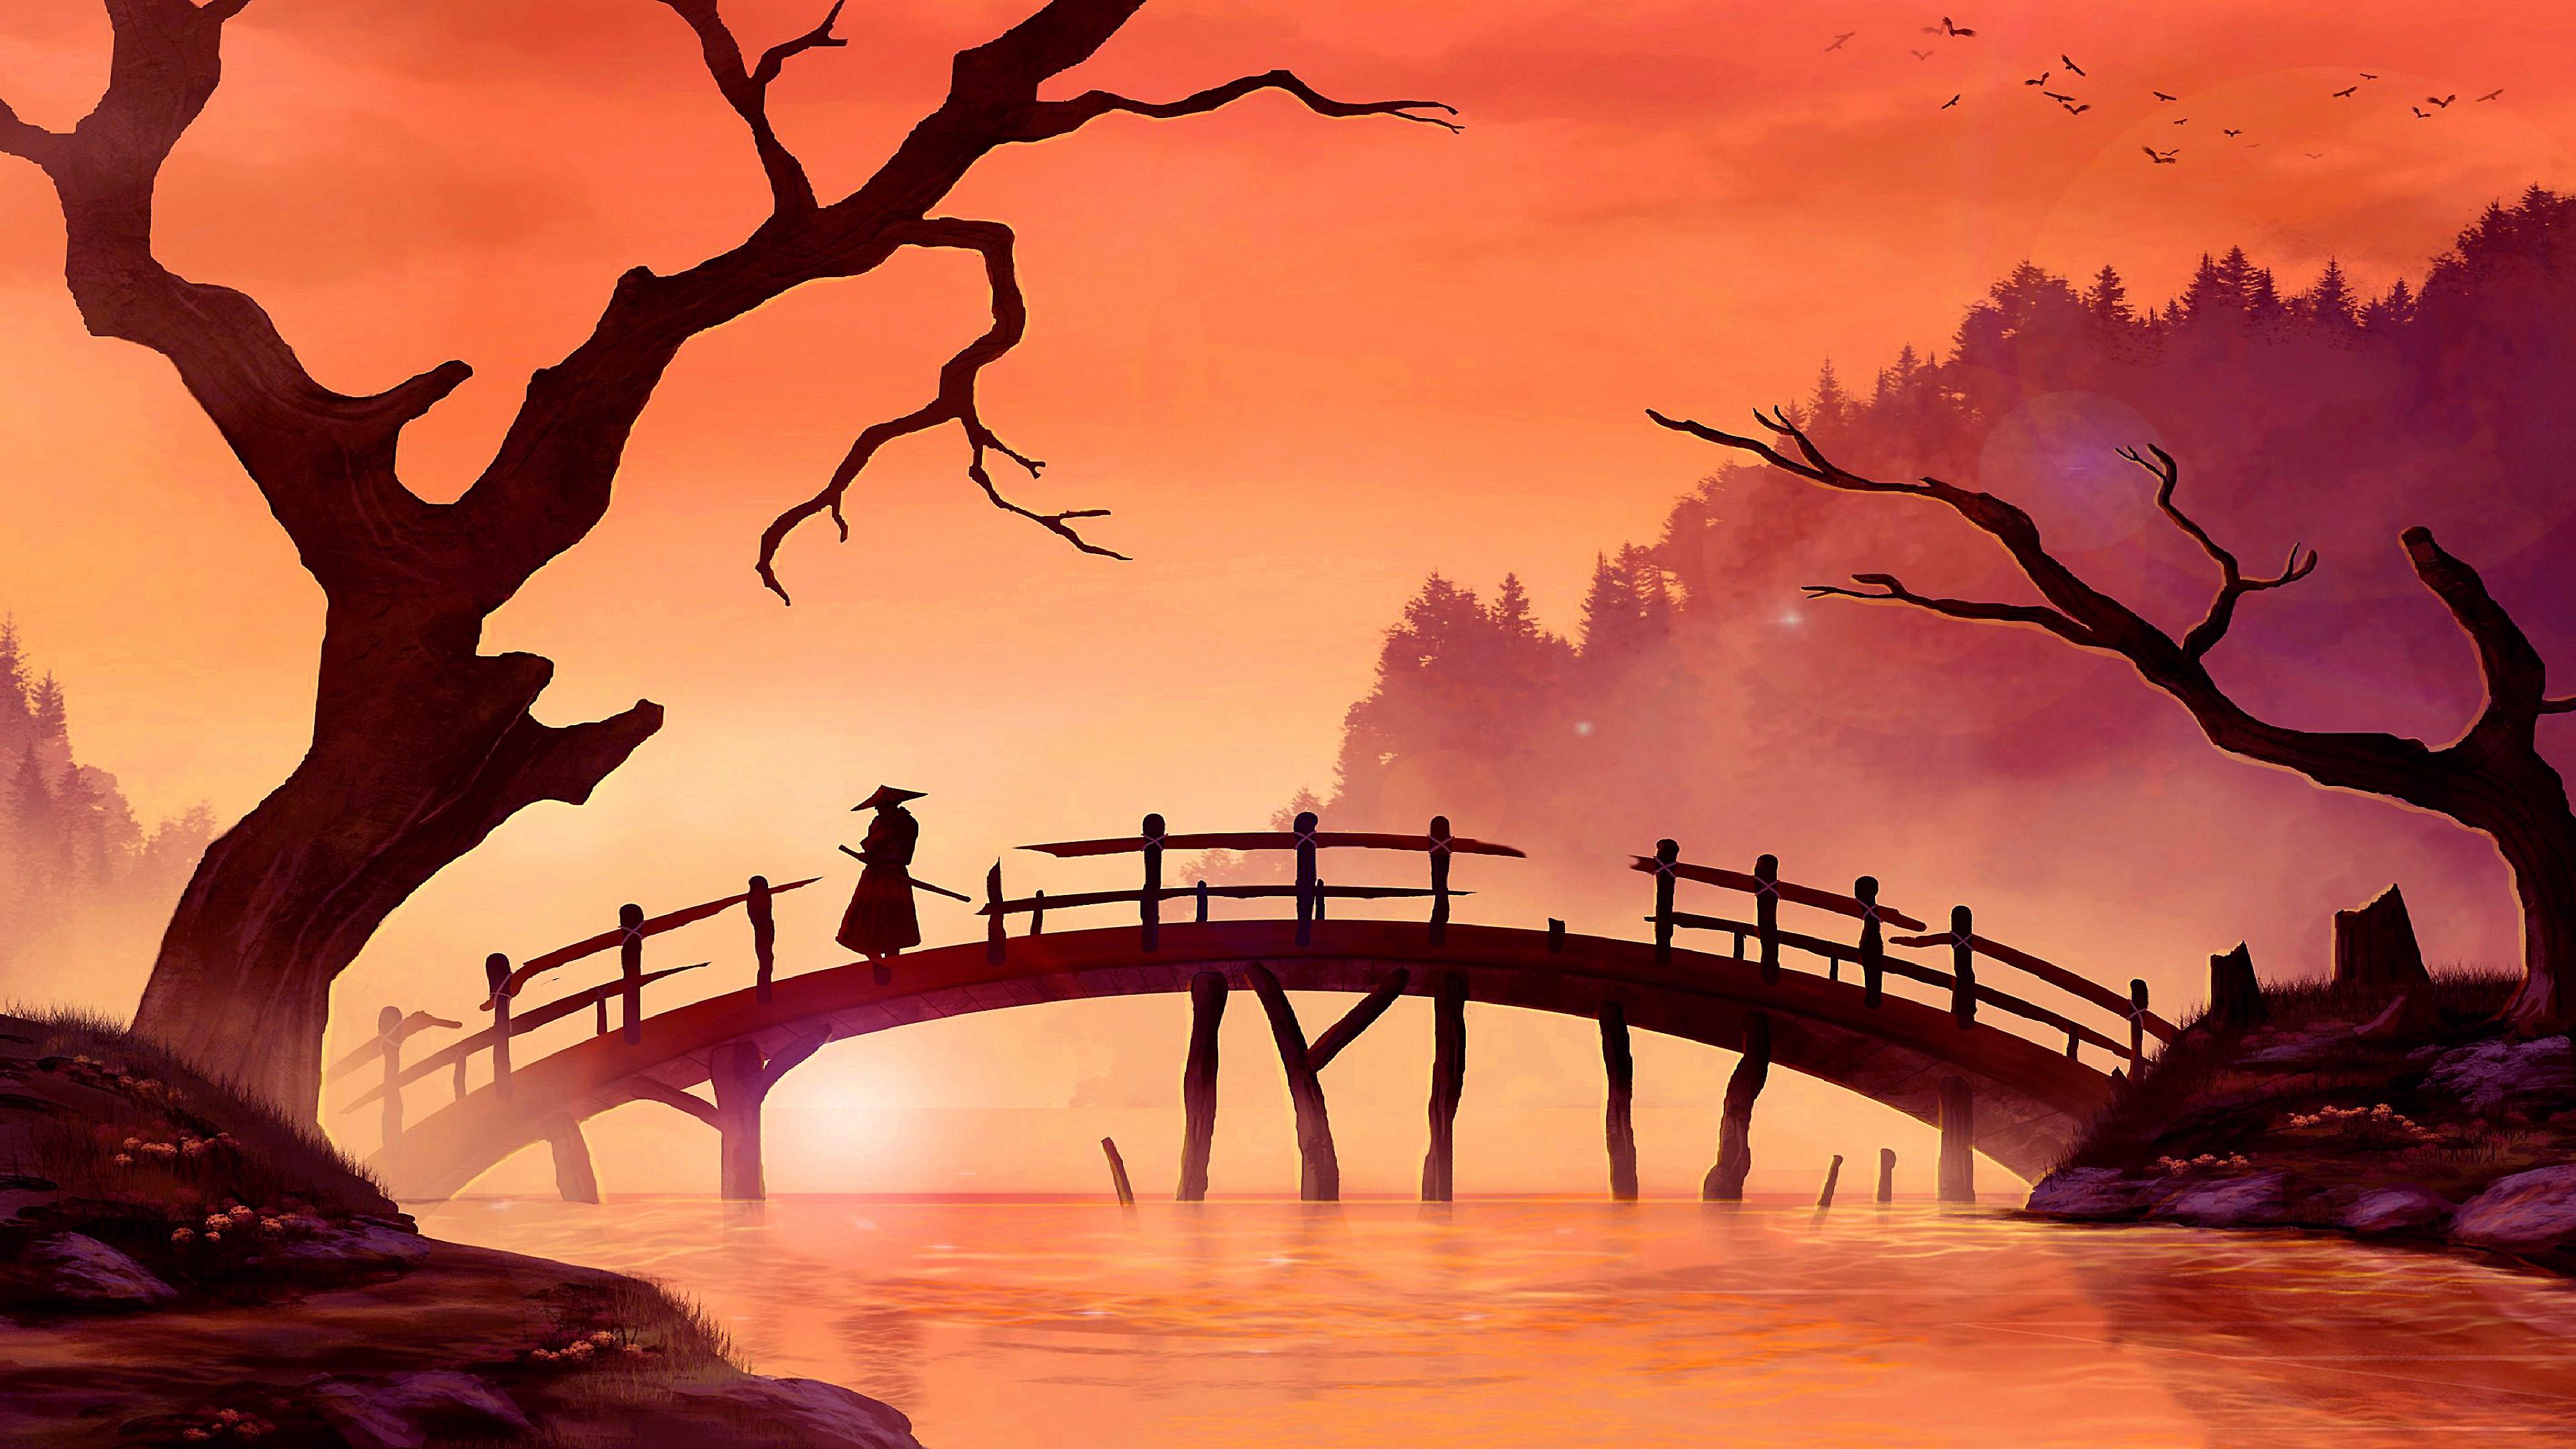 Samurai On Bridge - Japan Painting Art 4K UltraHD ...